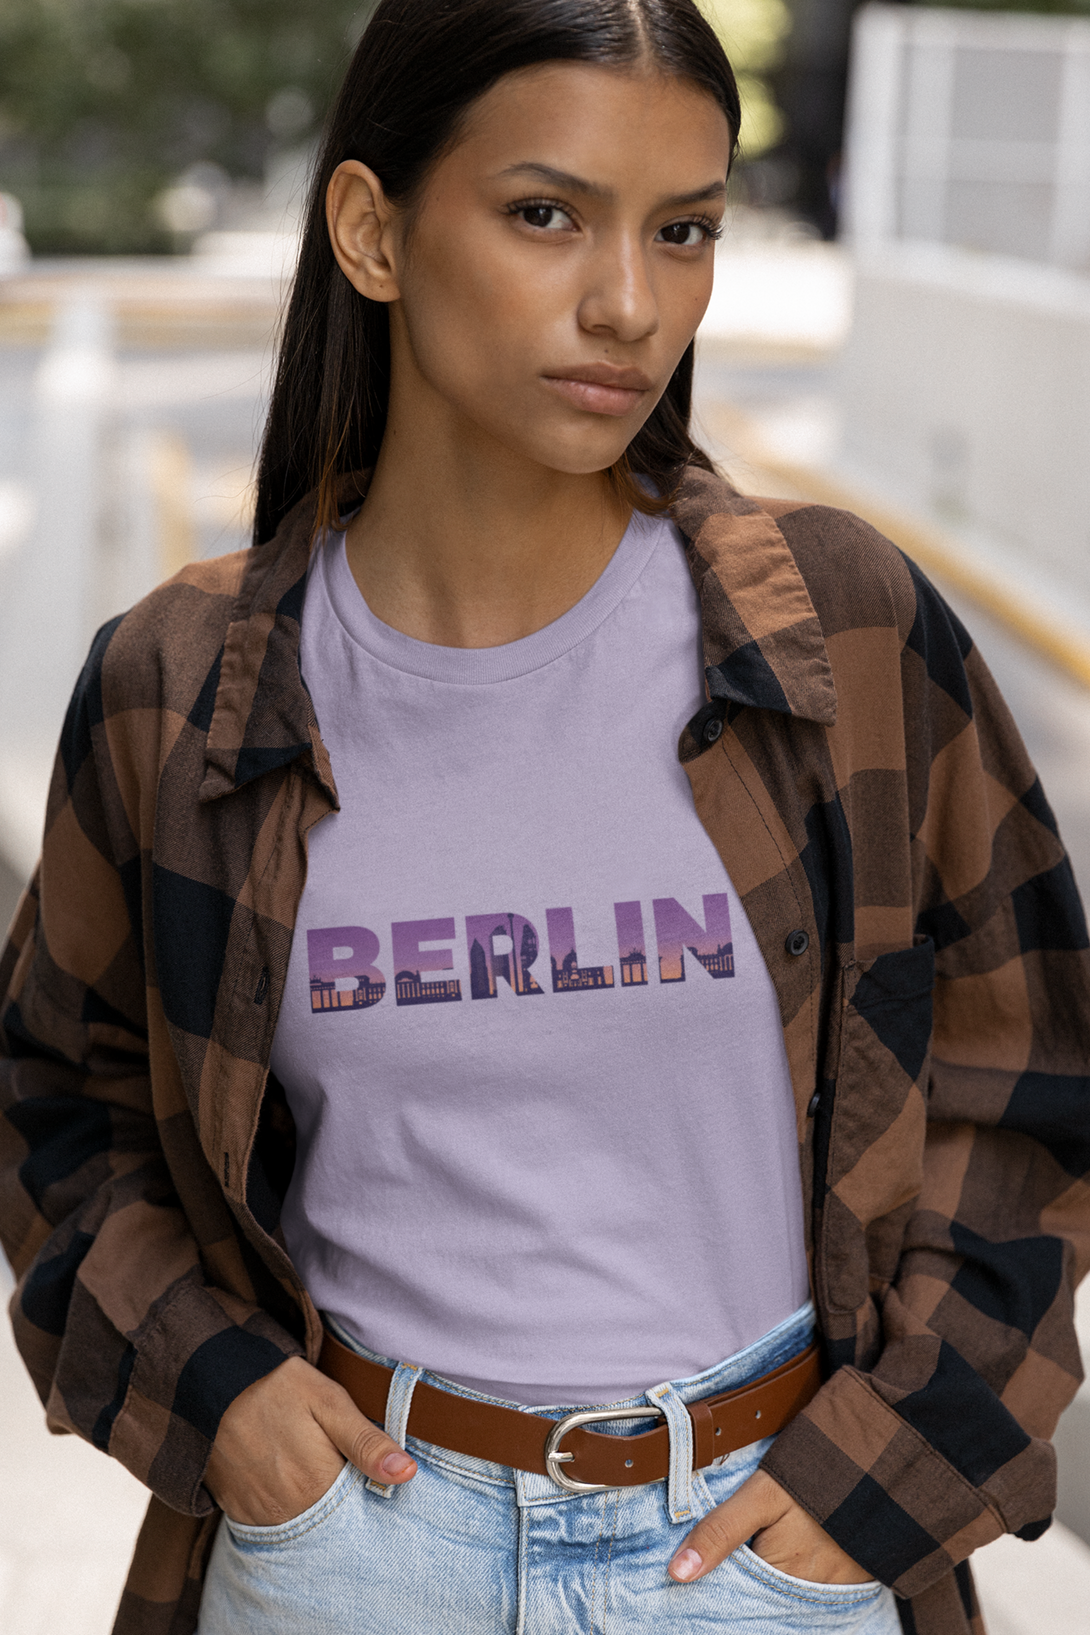 Berlin Skyline Printed T-Shirt For Women - WowWaves - 8